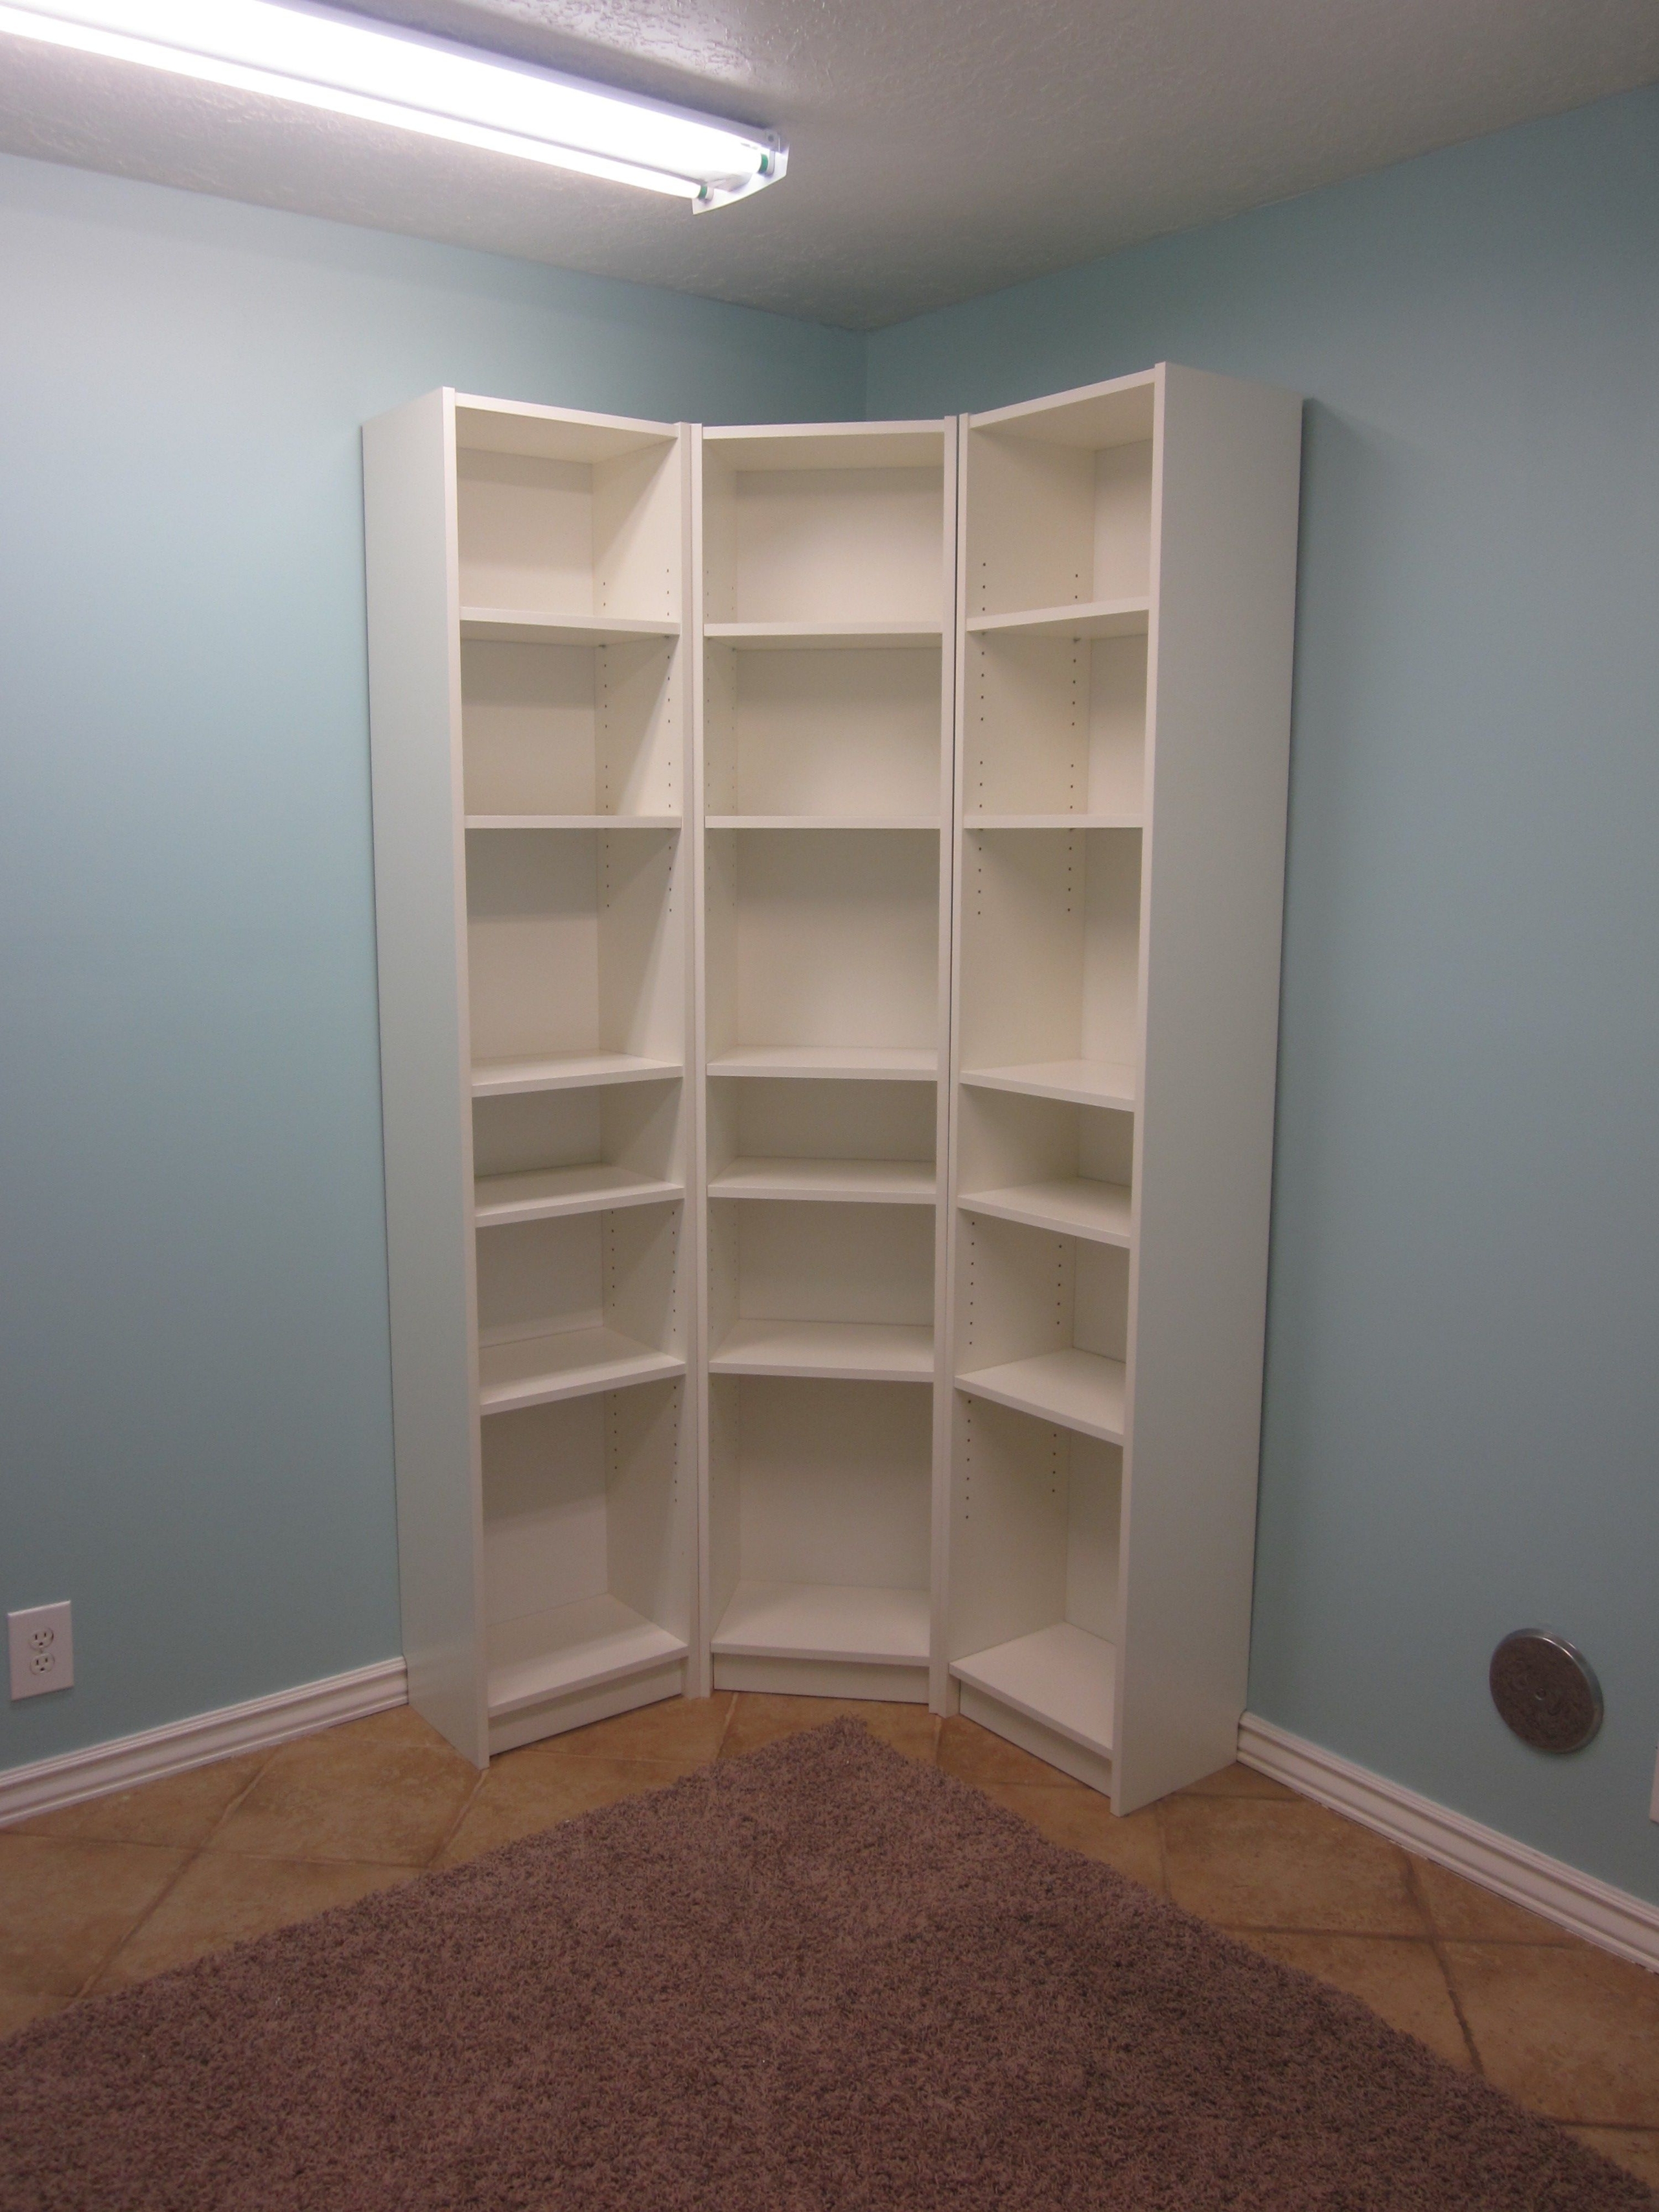 Corner Cabinet Bookcase Ideas On Foter 6900